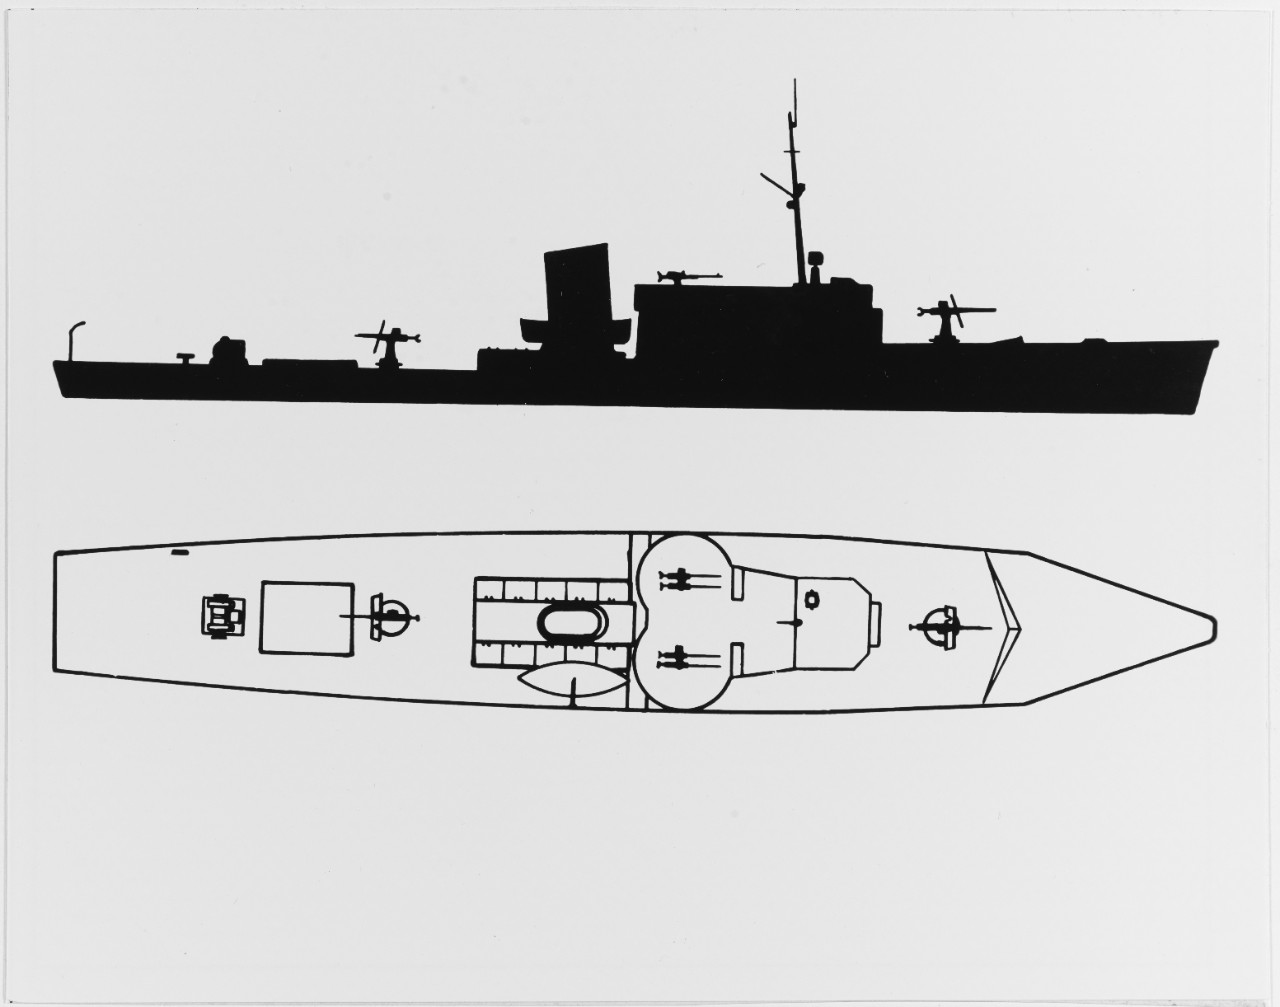 T-301 Class Soviet MSI